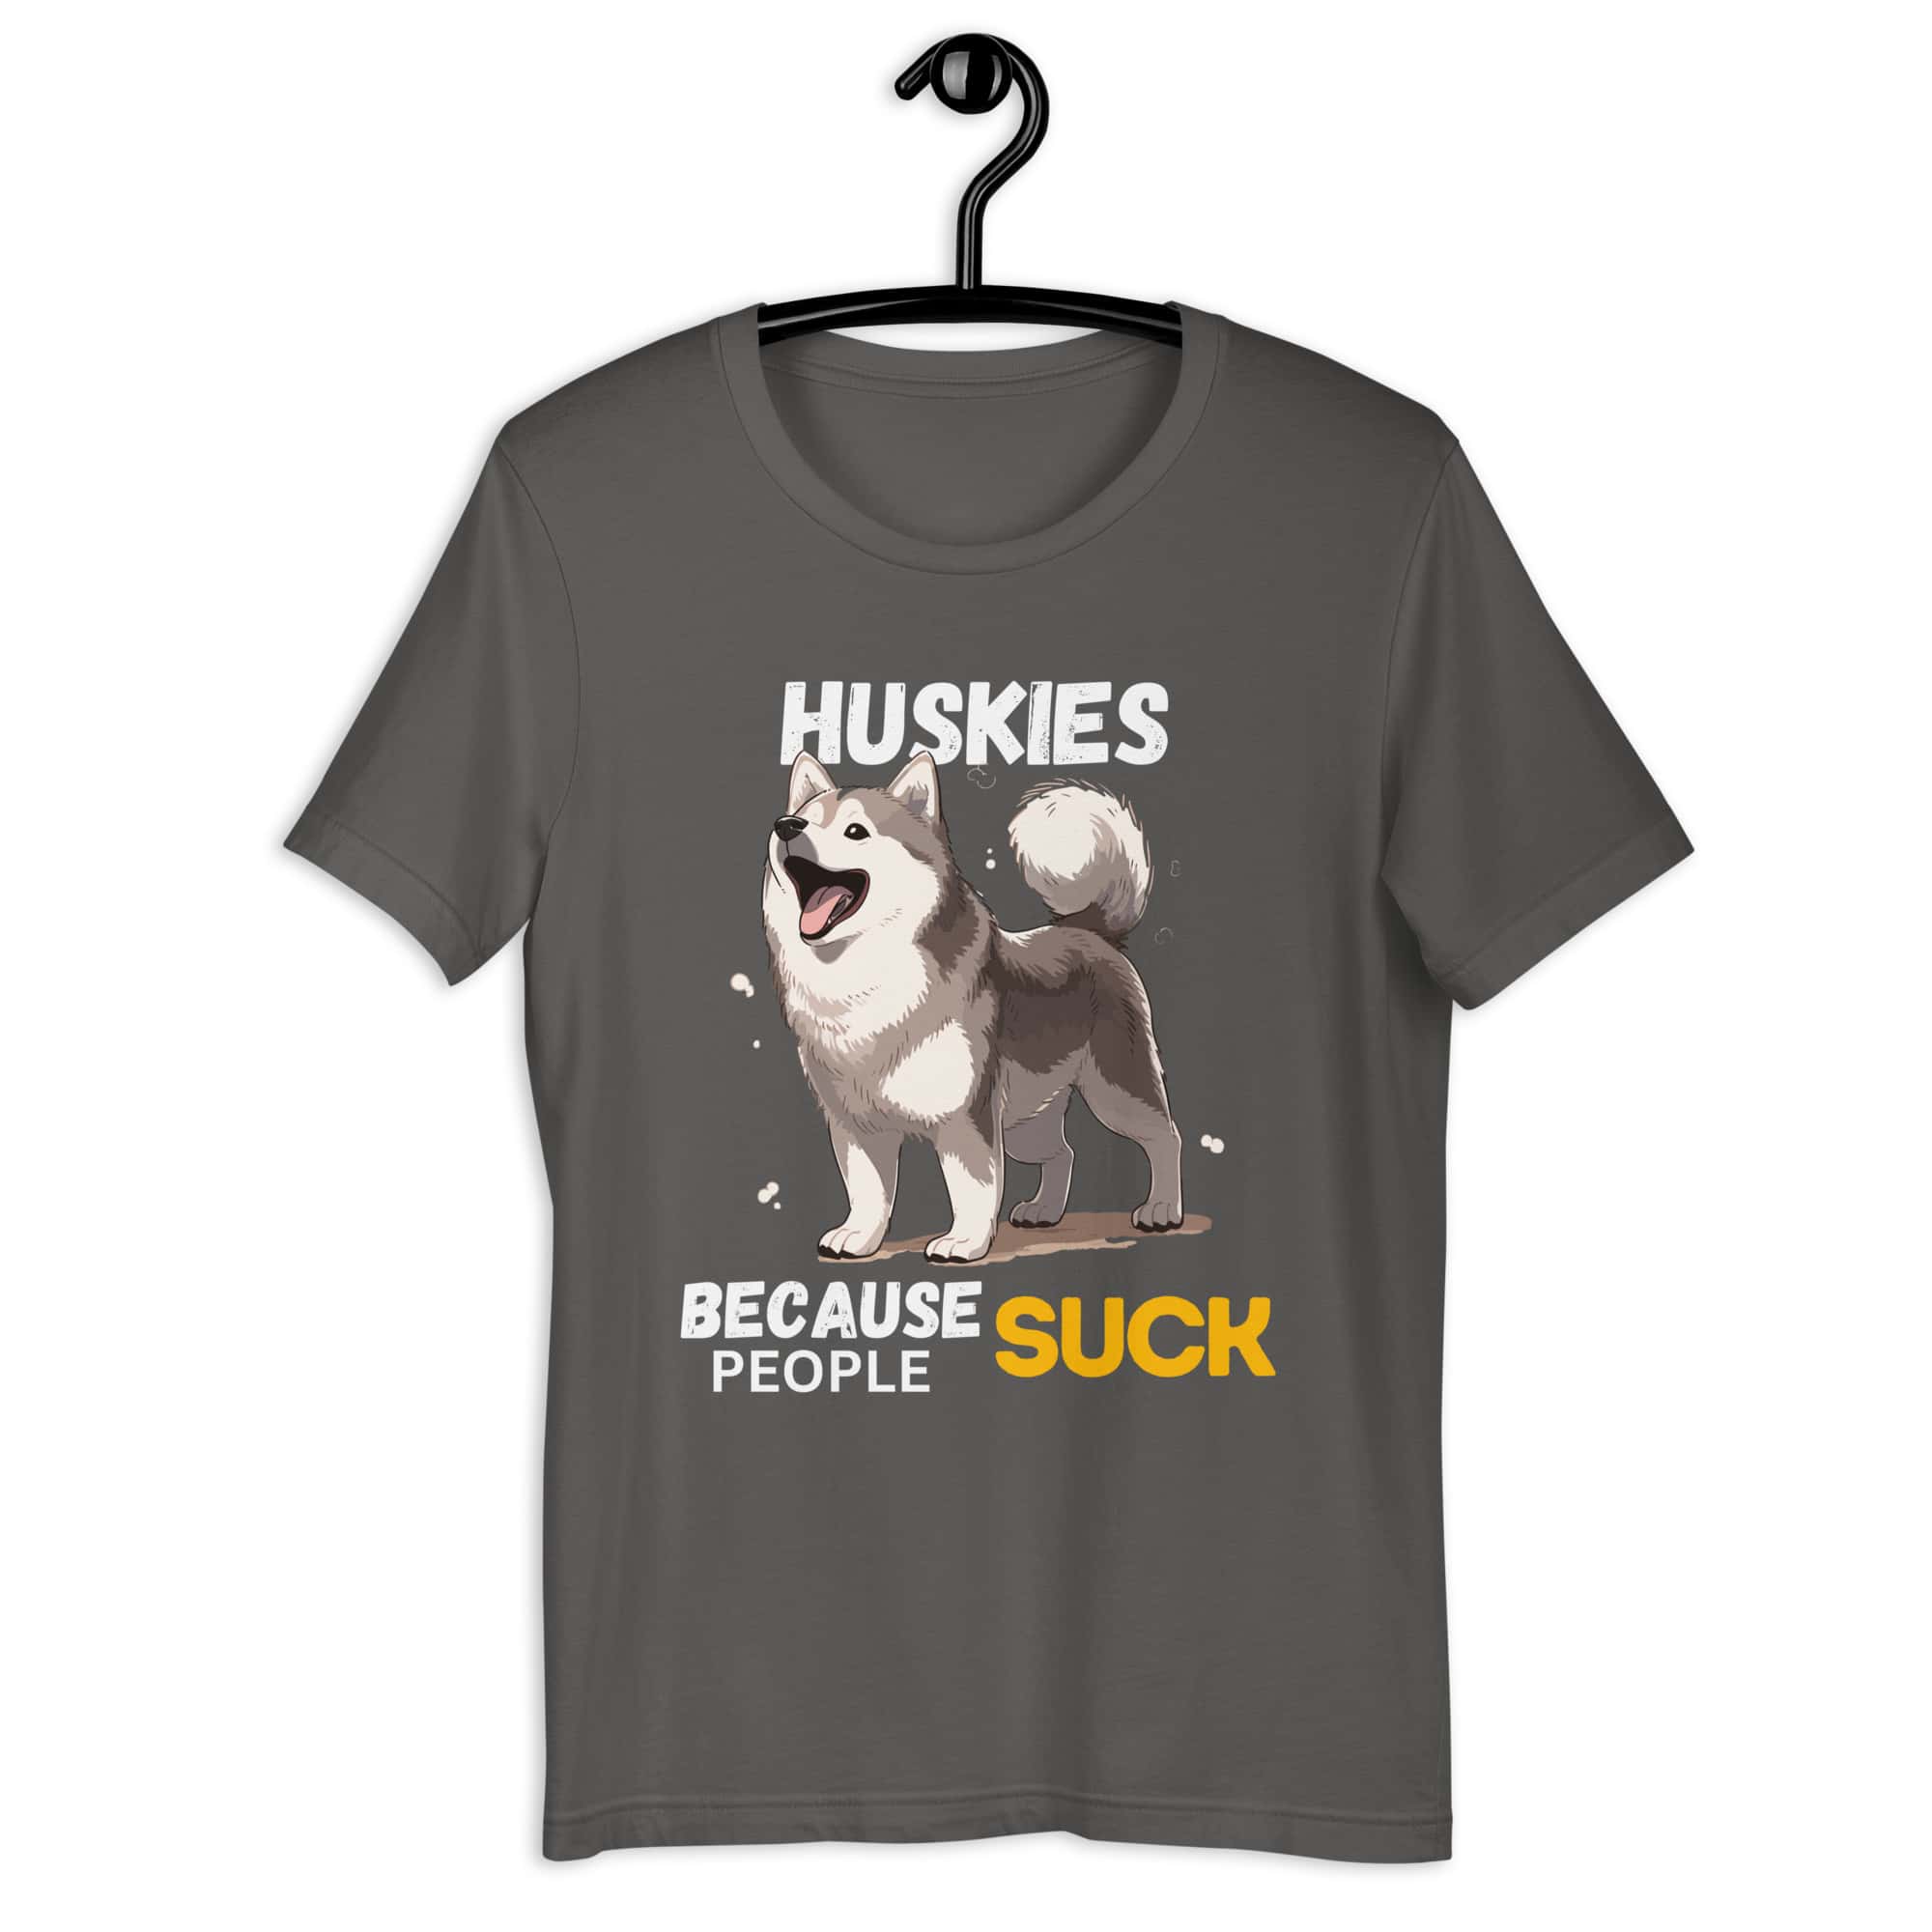 Huskies Because People Suck Unisex T-Shirt gray